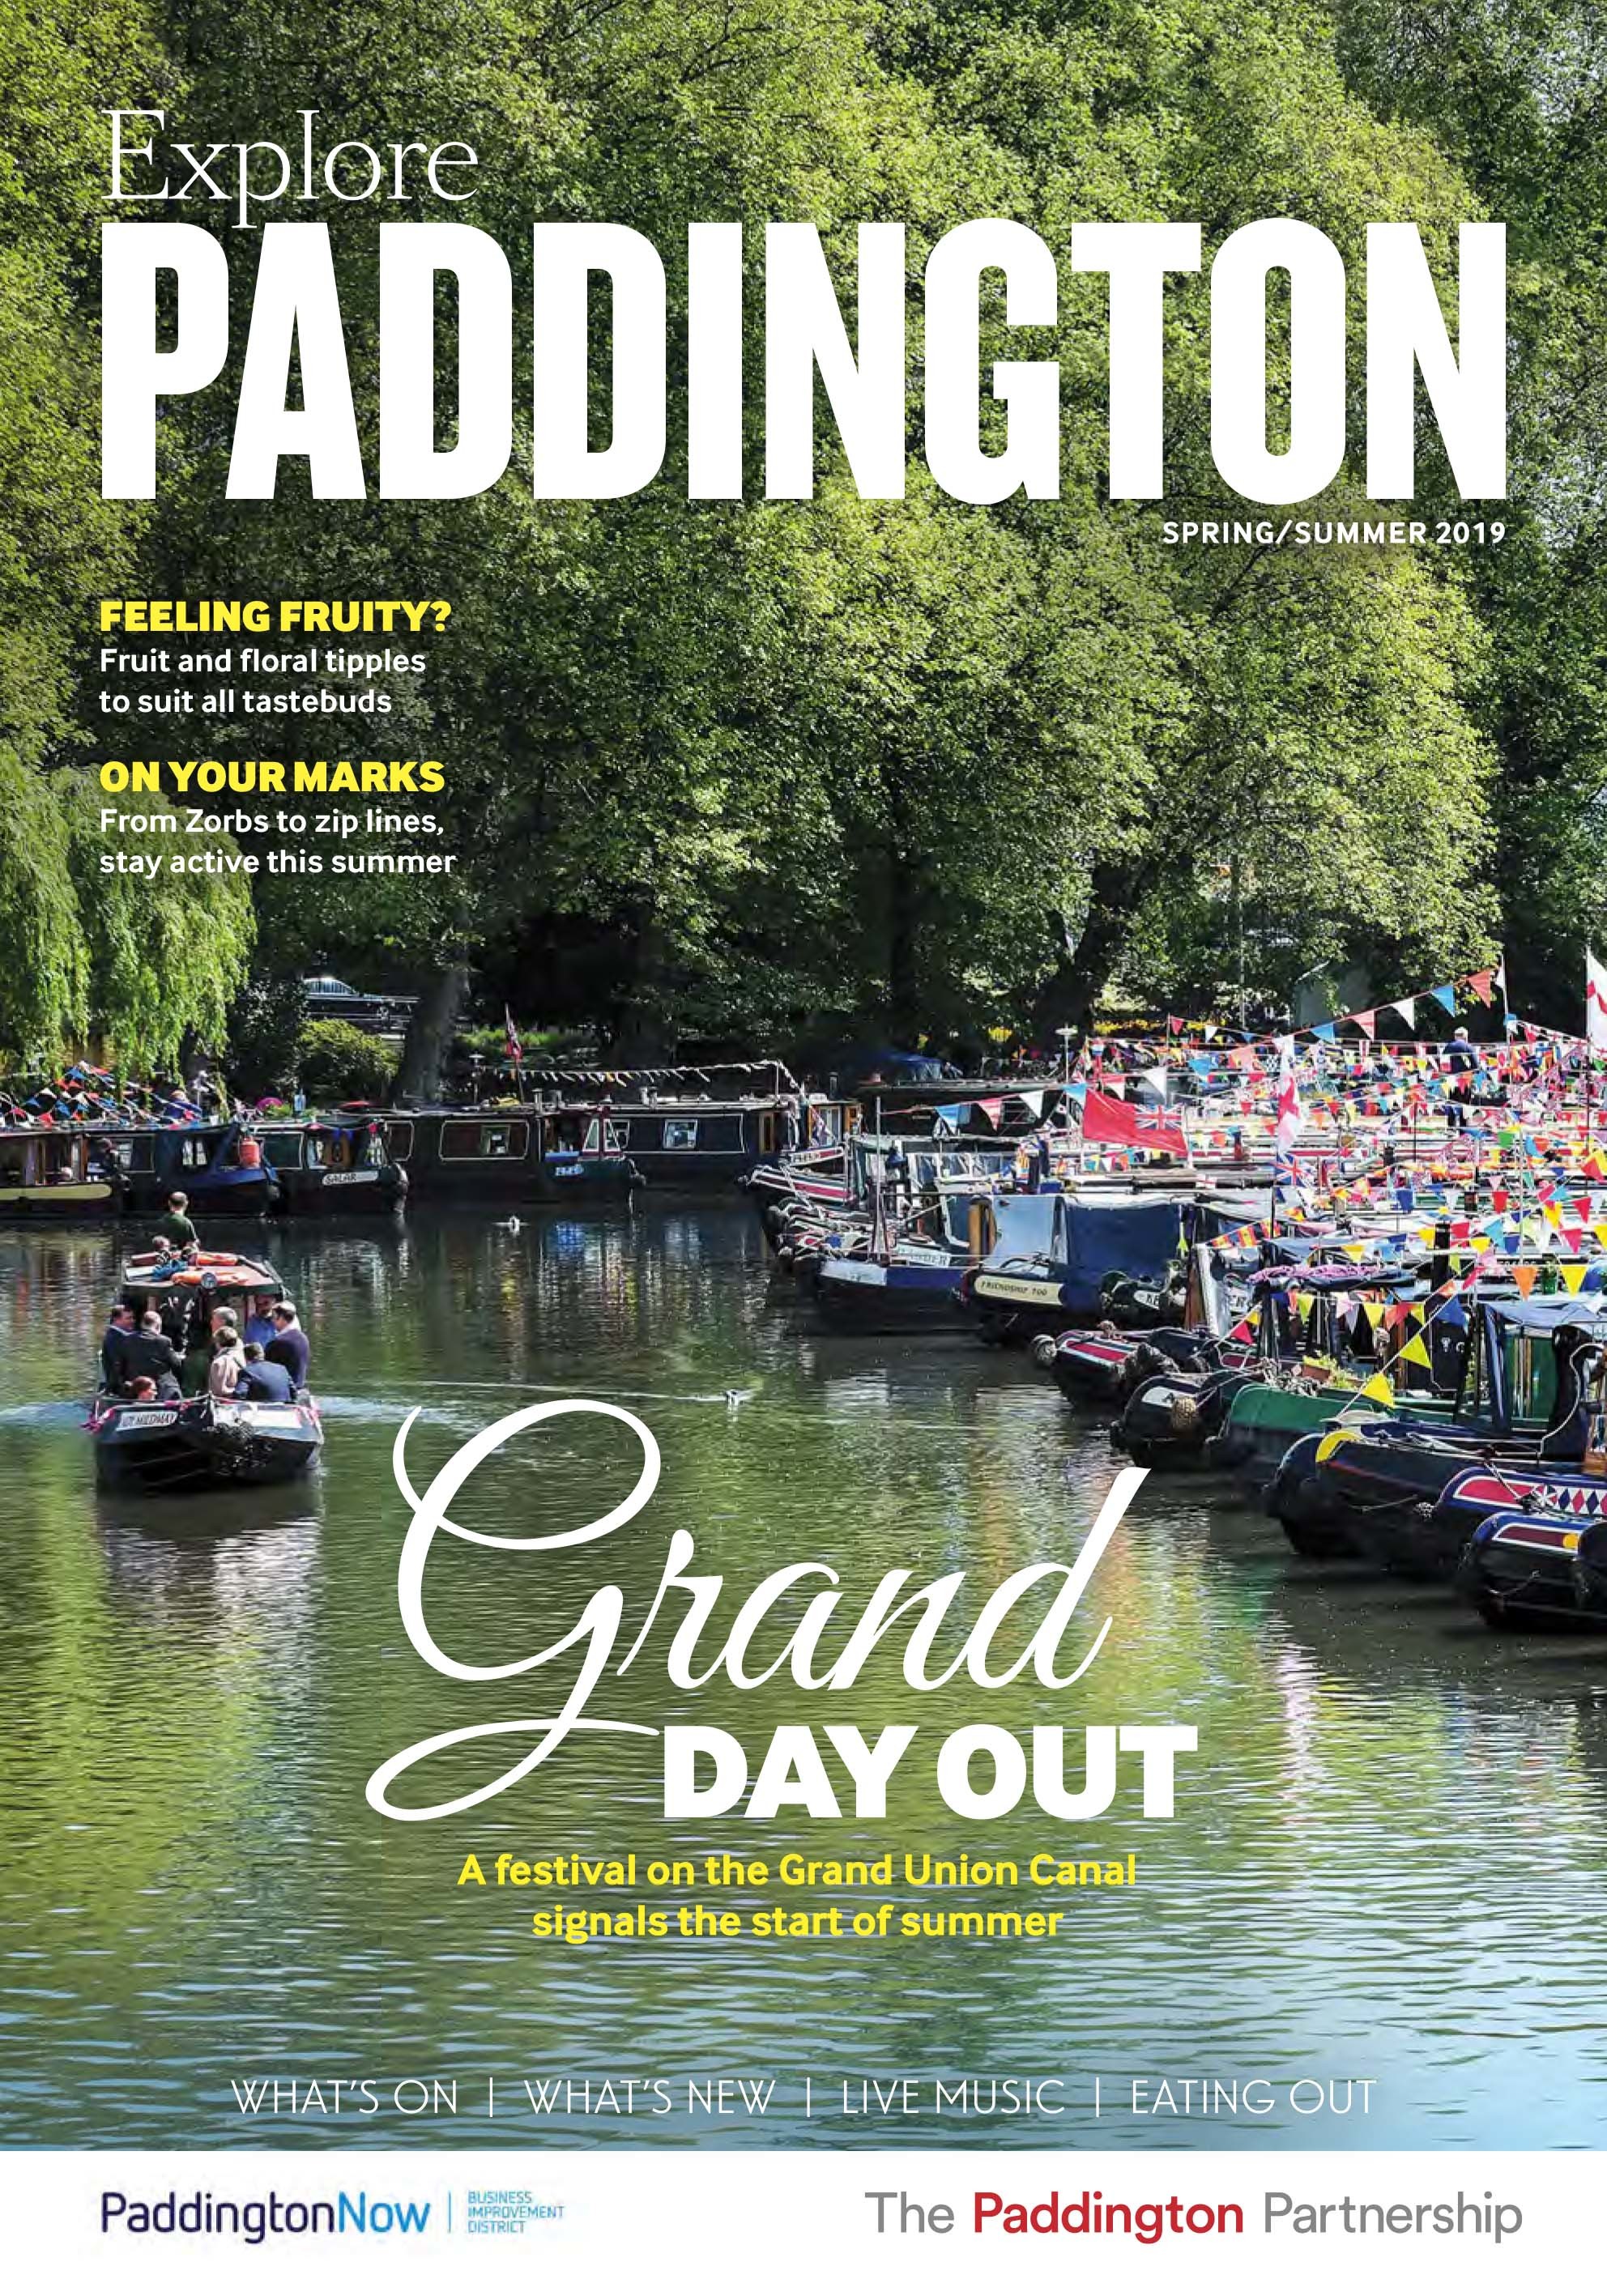 Explore Paddington, Spring/Summer 2019